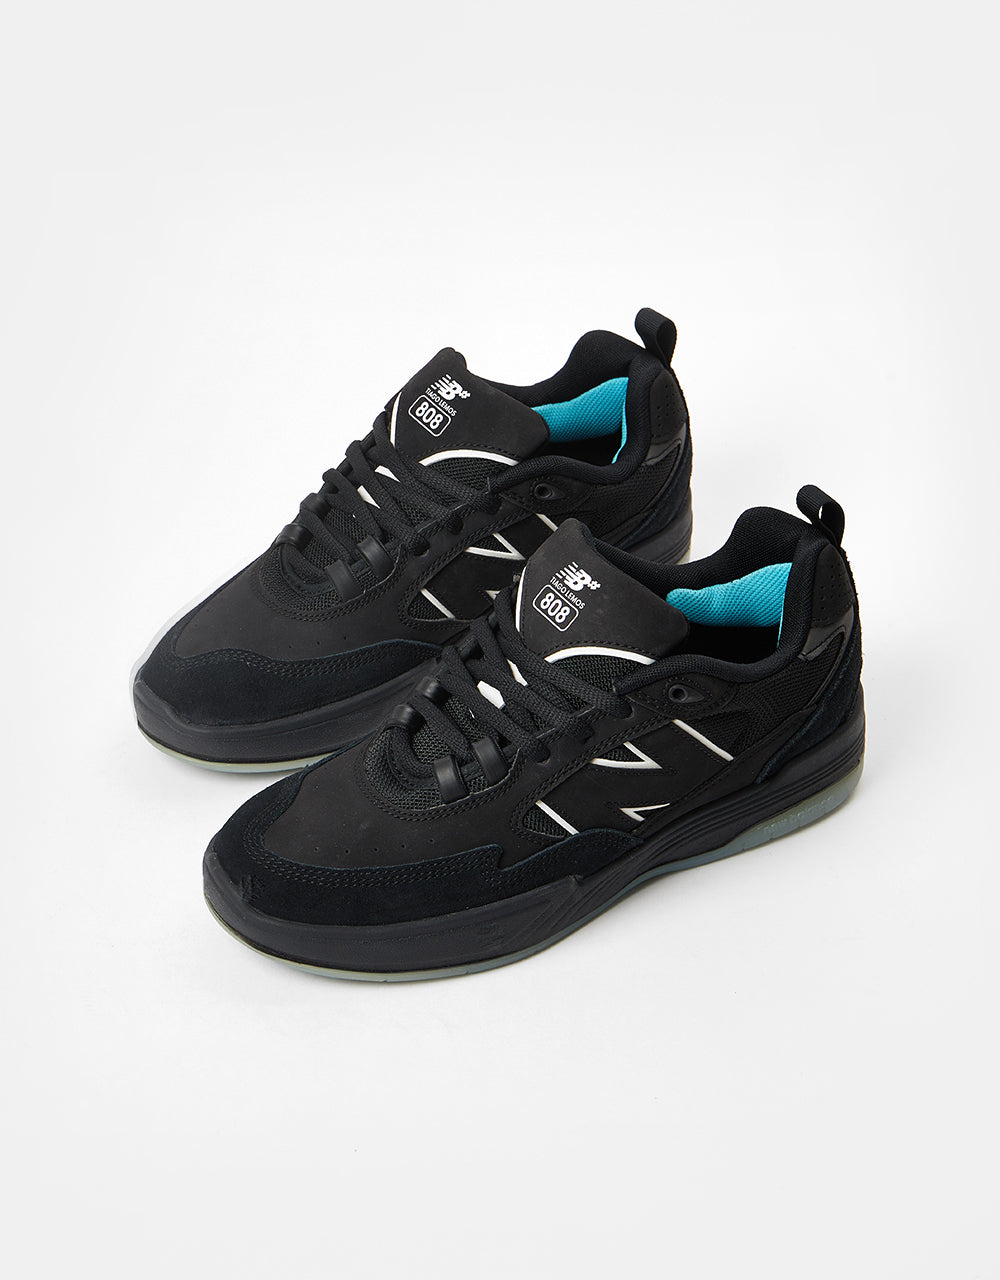 New Balance Numeric 808 Skate Shoes - Black/Black